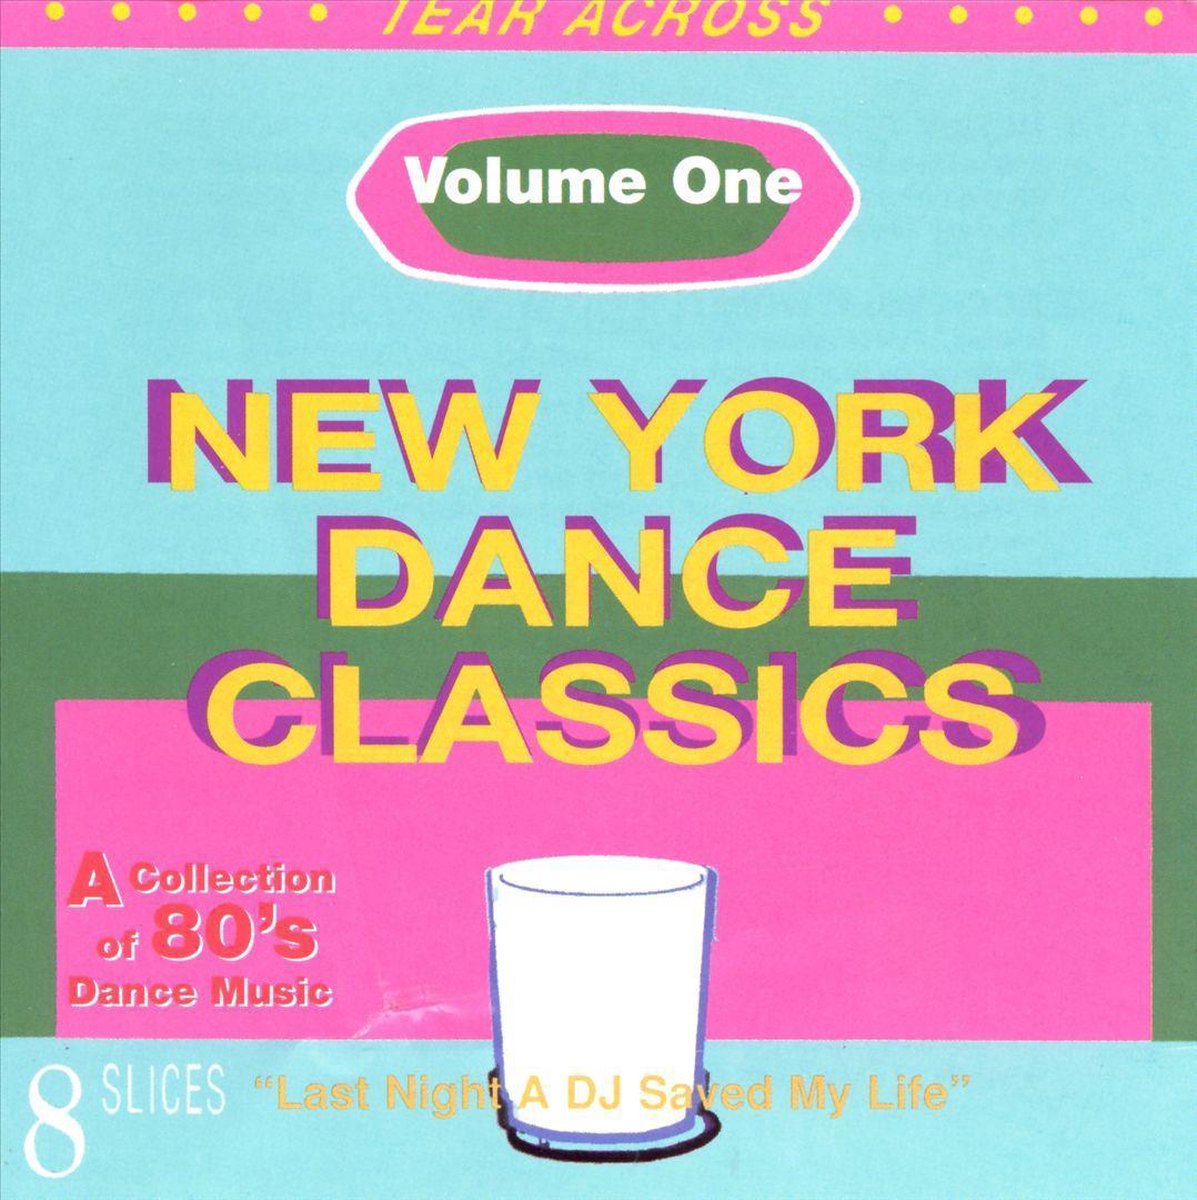 New York Dance Classics Vol. 1 - various artists